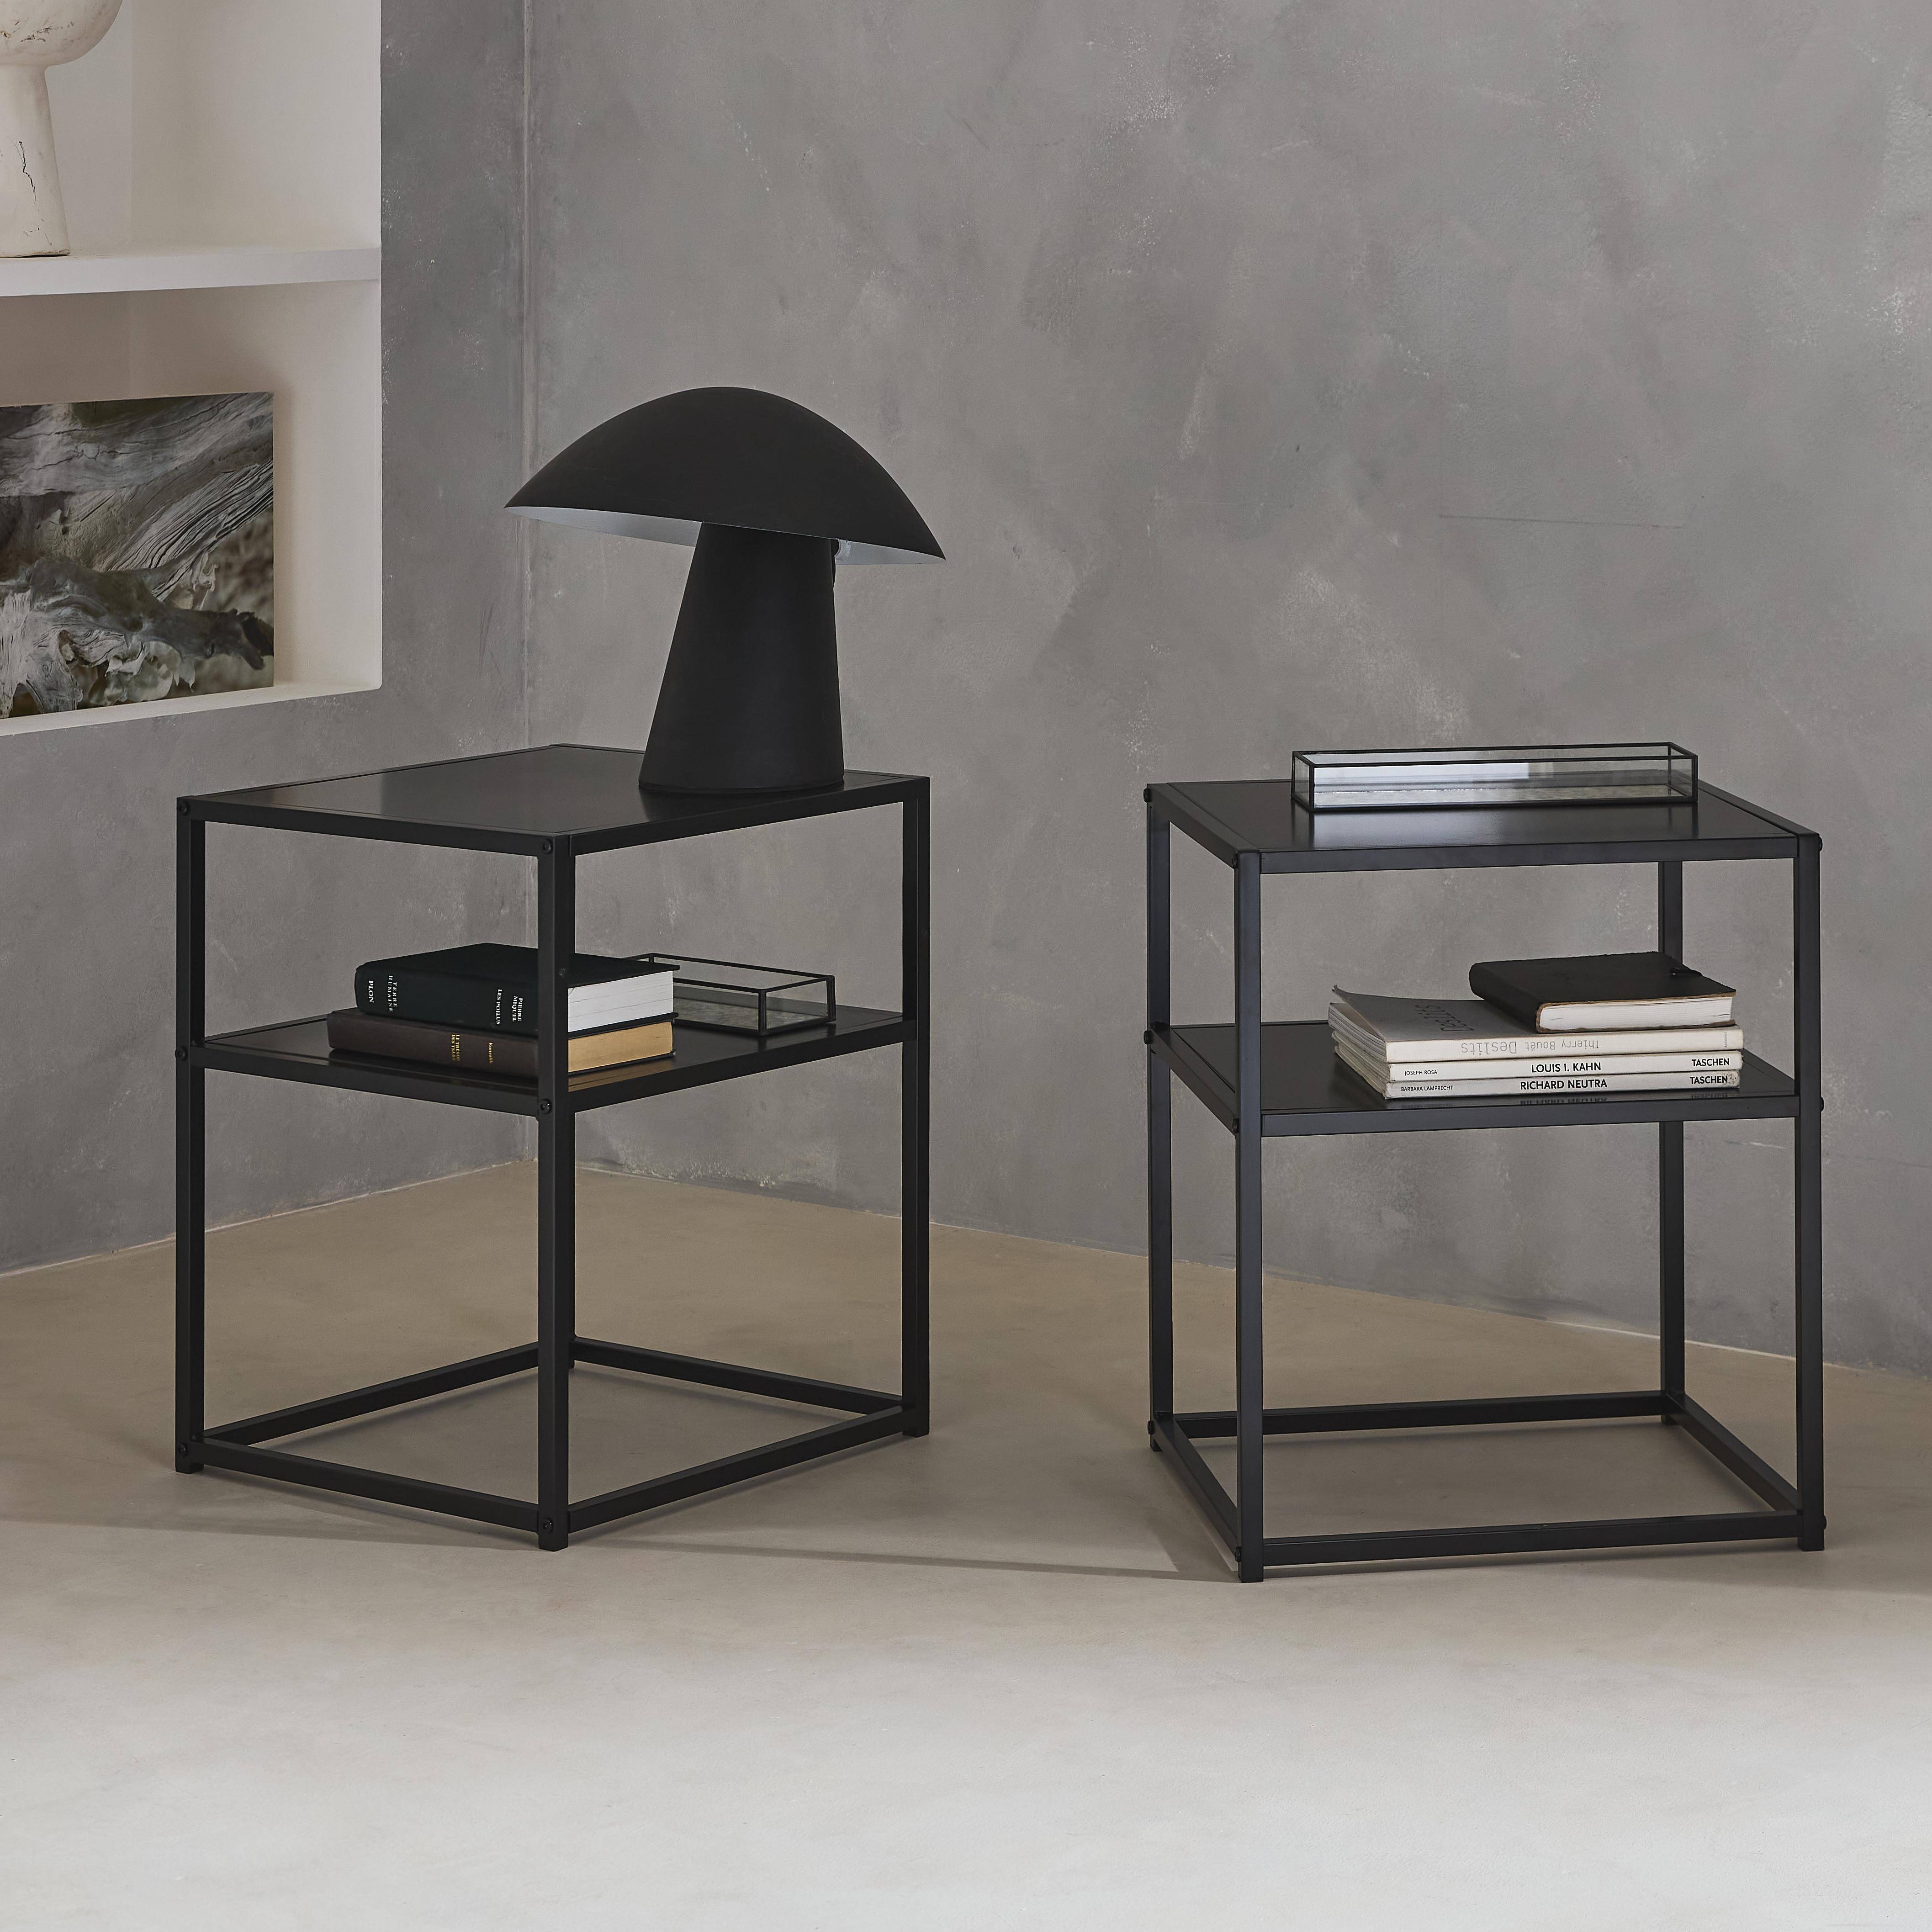 Set of 2 black metal bedside tables, 1 shelf, INDUSTRIAL L43xW40xH52cm,sweeek,Photo2